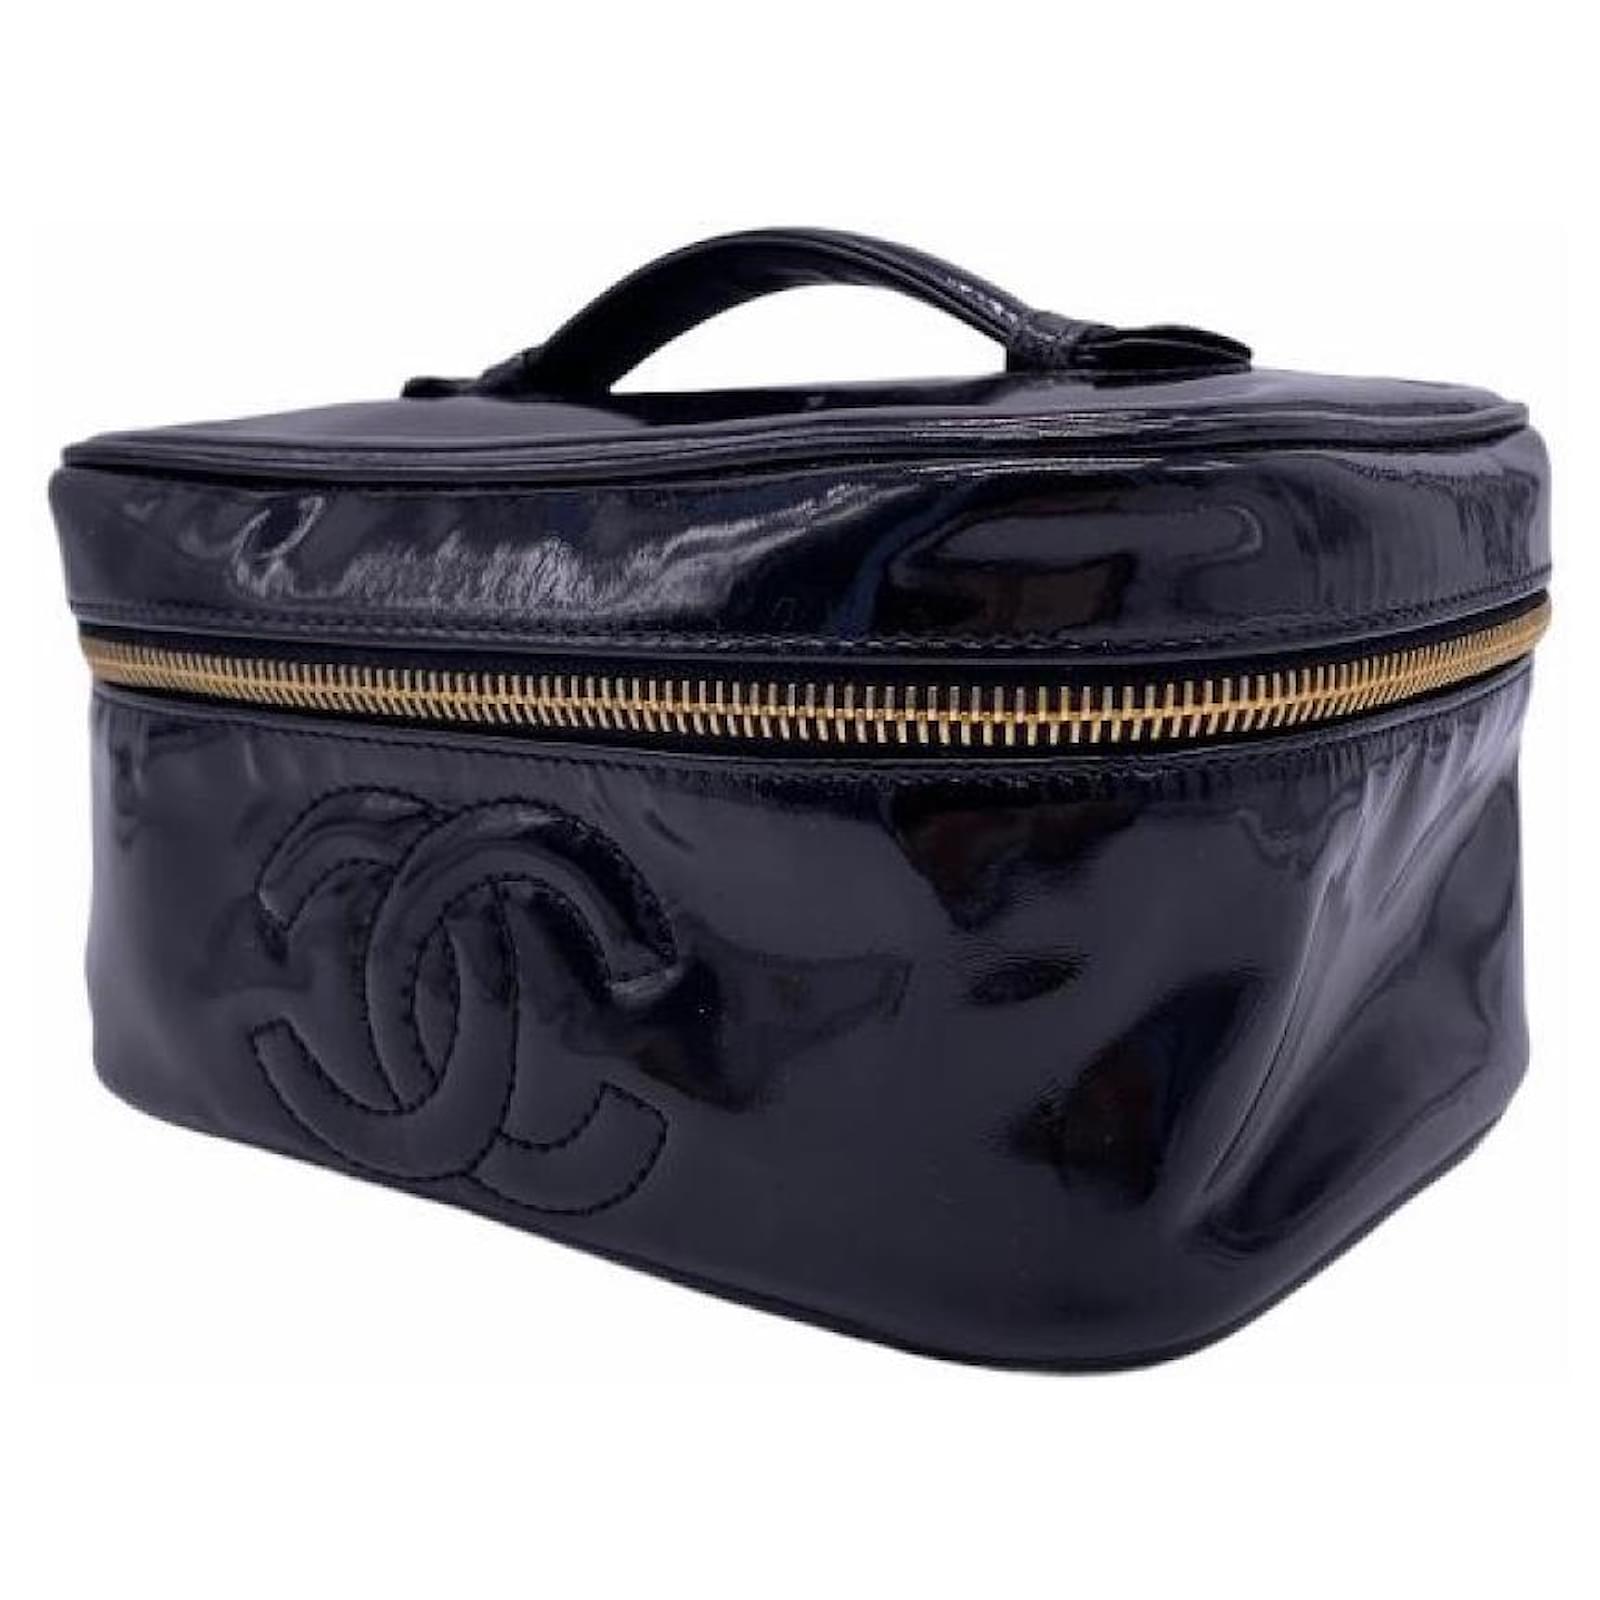 Used] Chanel CHANEL Enamel Vanity Bag Black Patent Leather Makeup